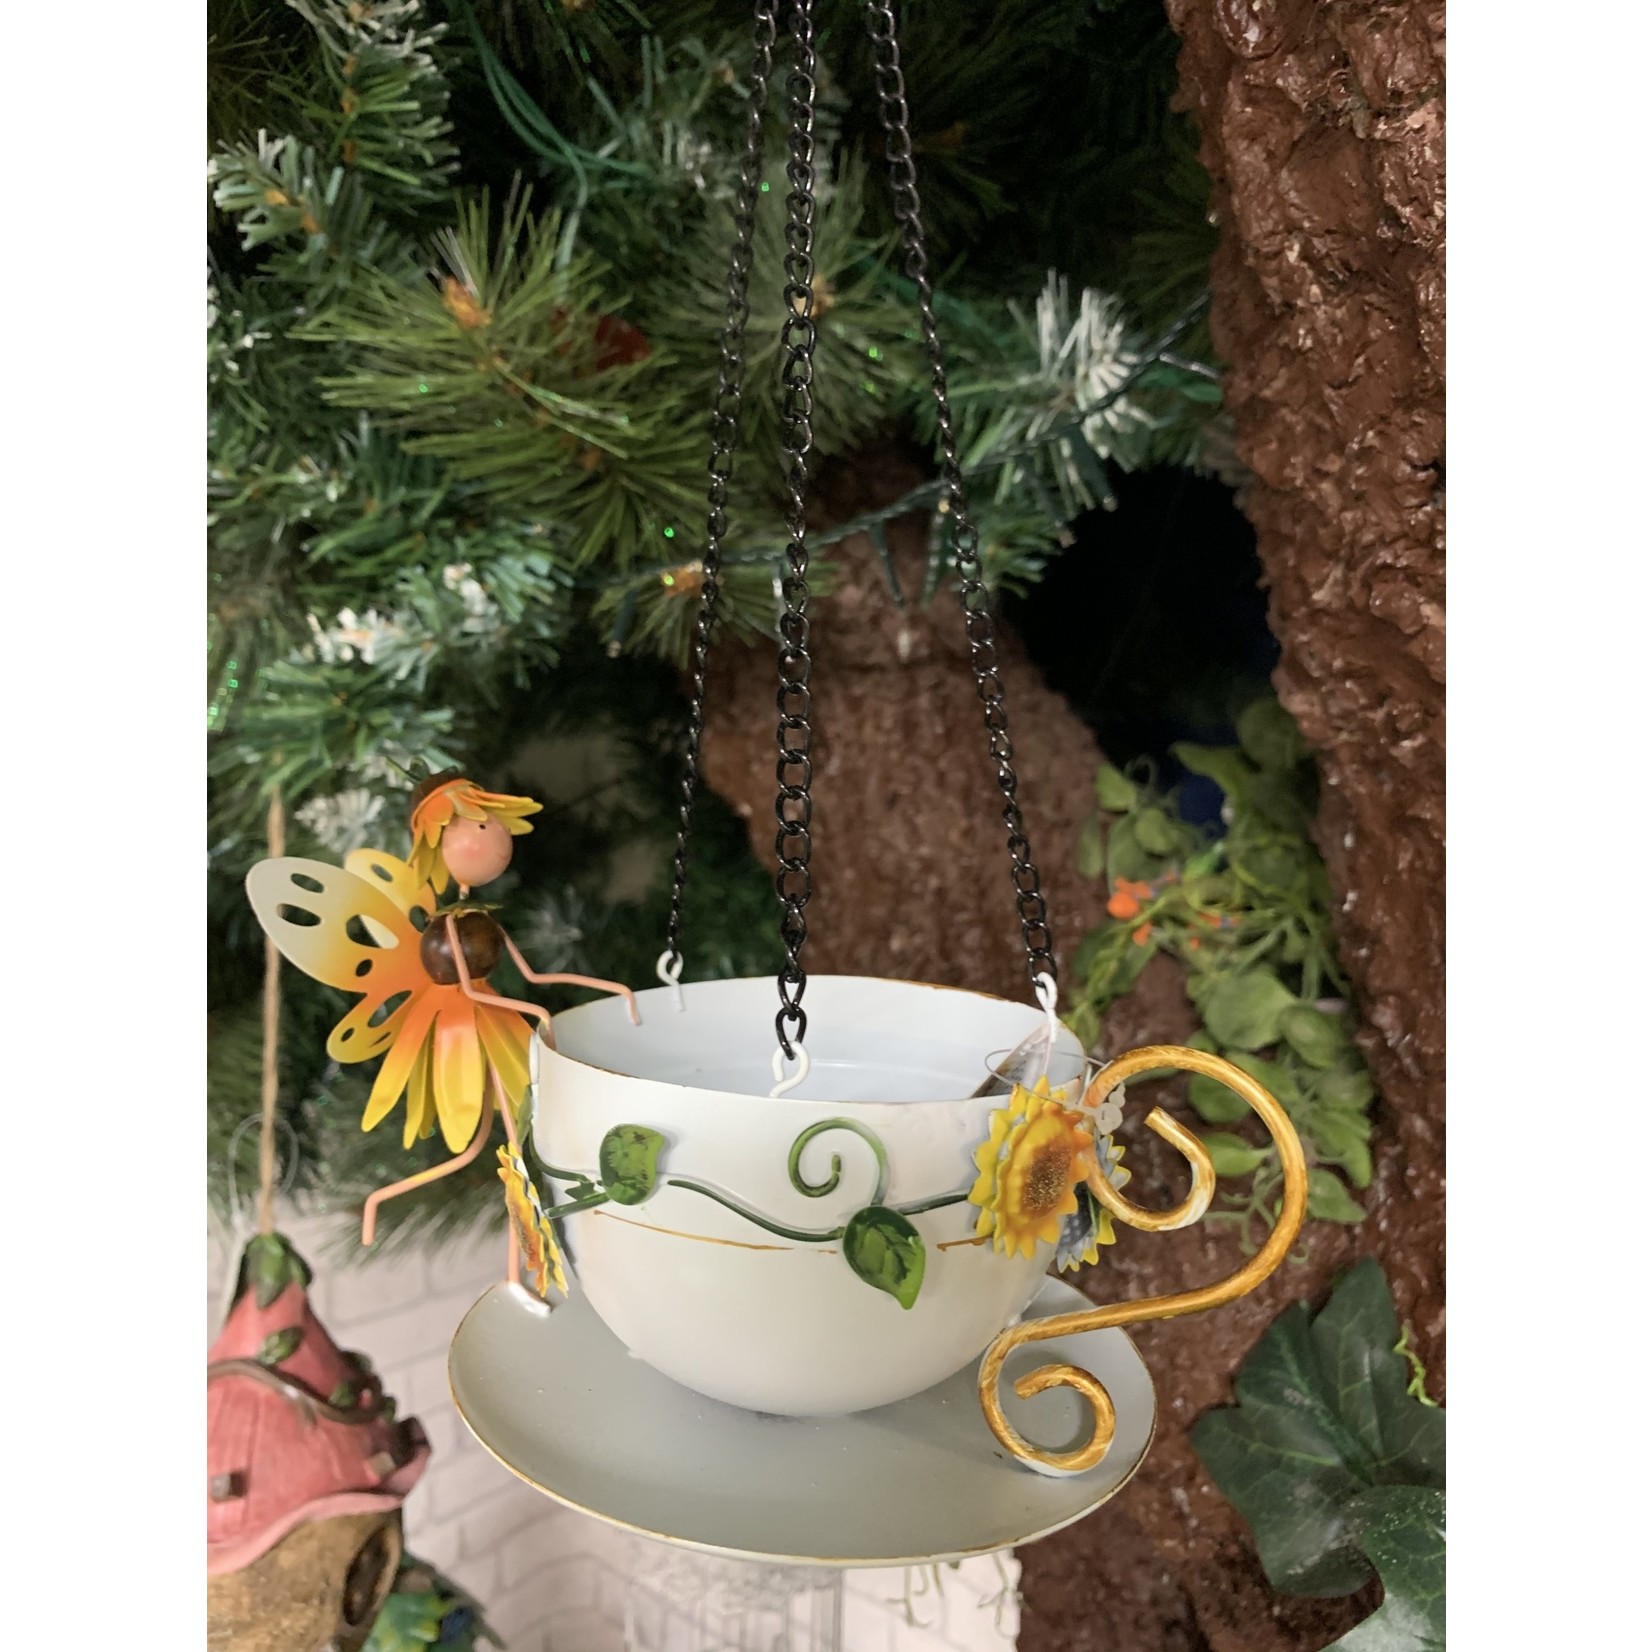 World of Make Believe Fairy Hanging Teacup Bird Feeder - Sunflower Honey